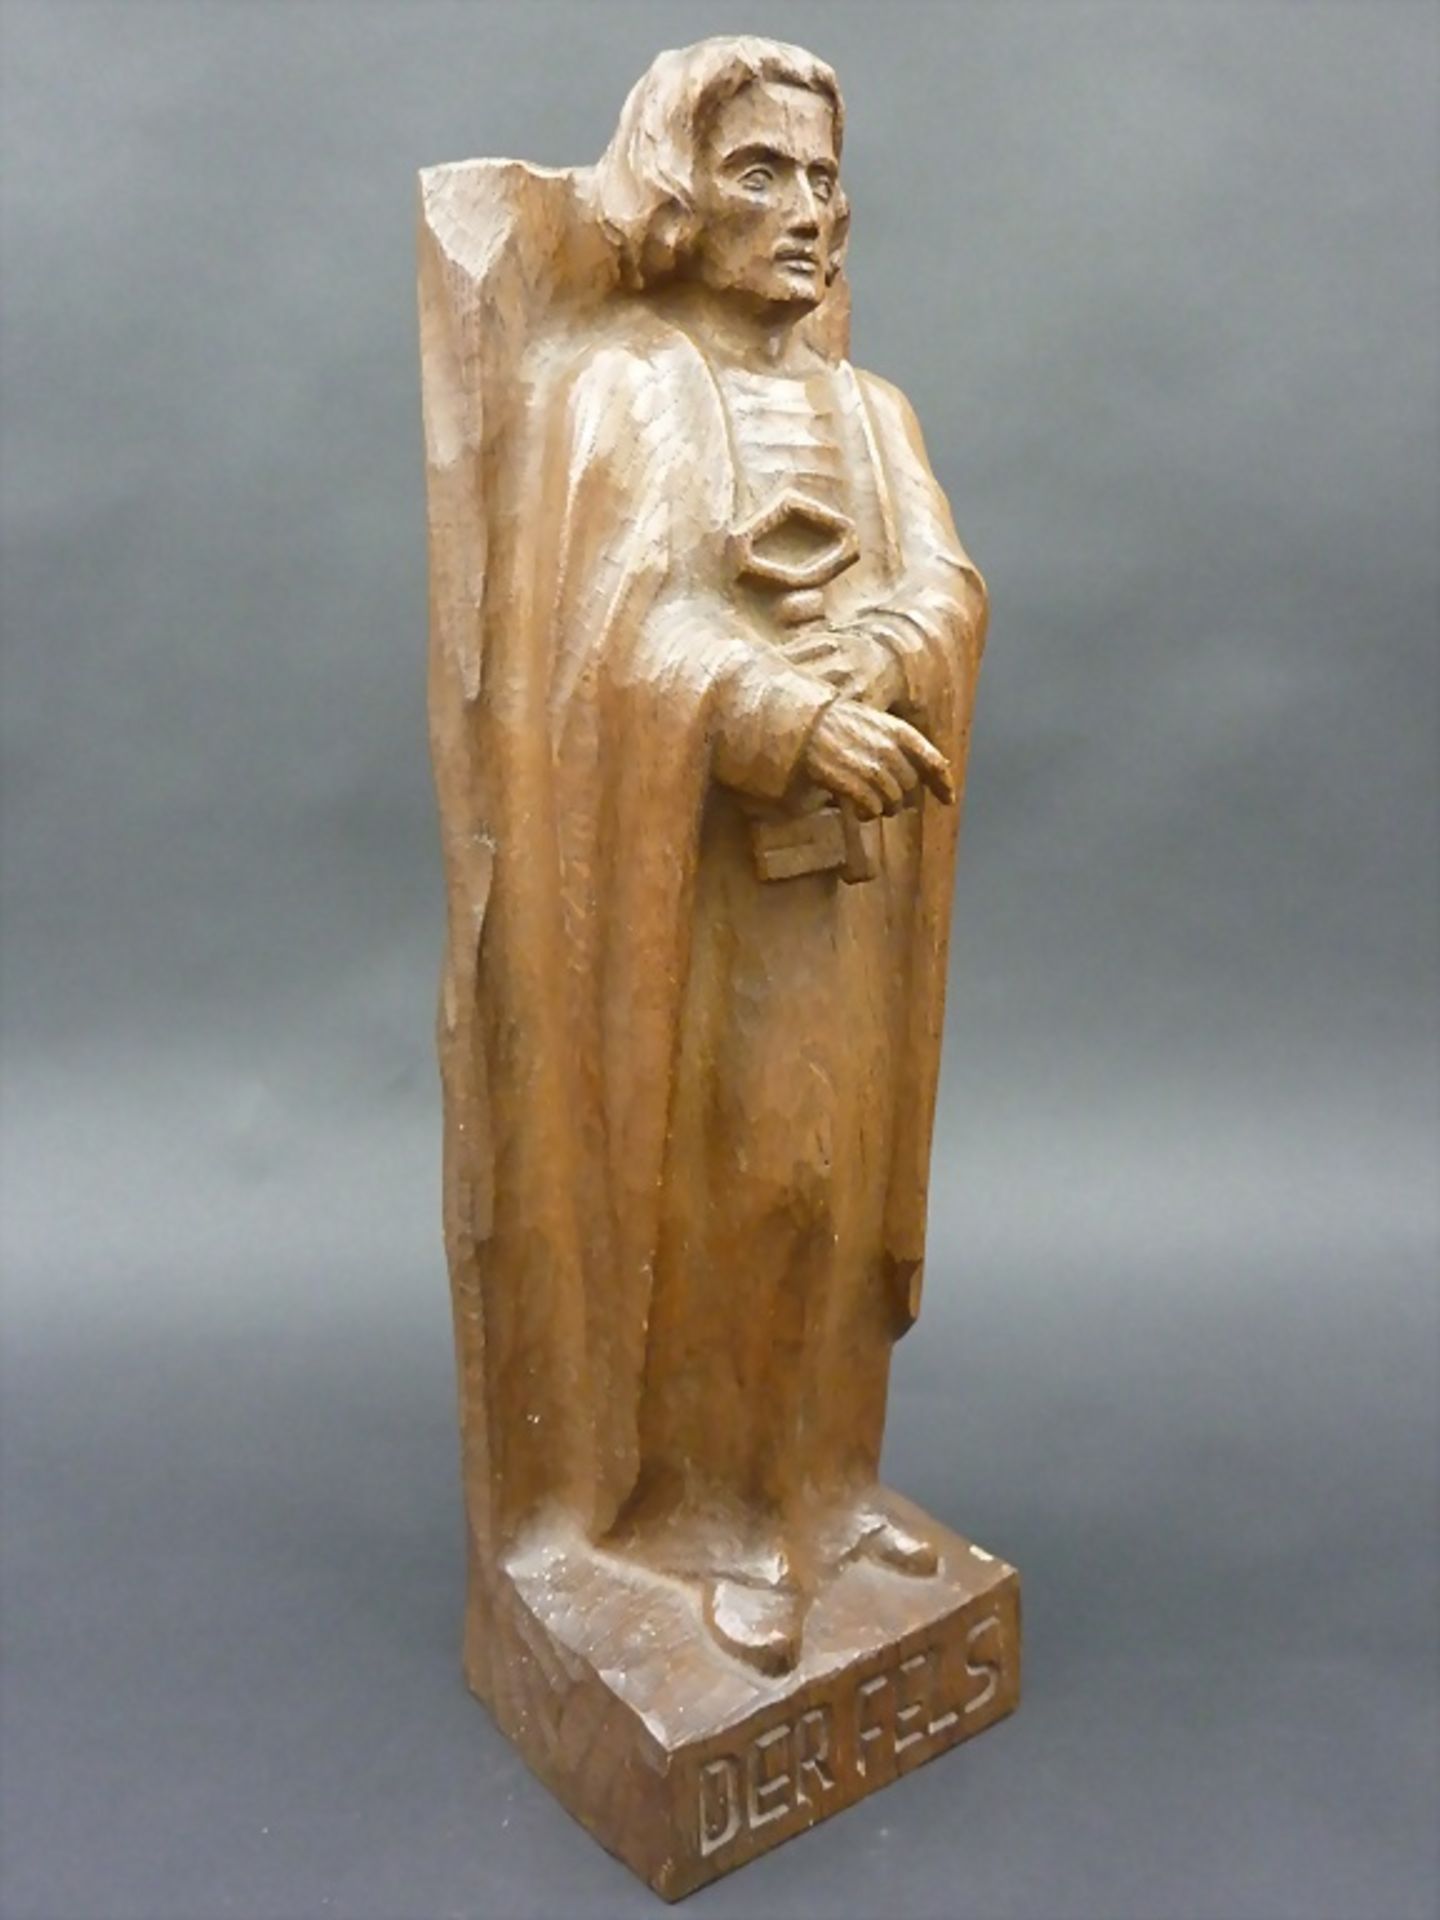 Holz-Skulptur 'Heiliger Apostel Petrus - Der Fels' / Wooden sculpture 'Holy Apostle Peter - ... - Bild 4 aus 12